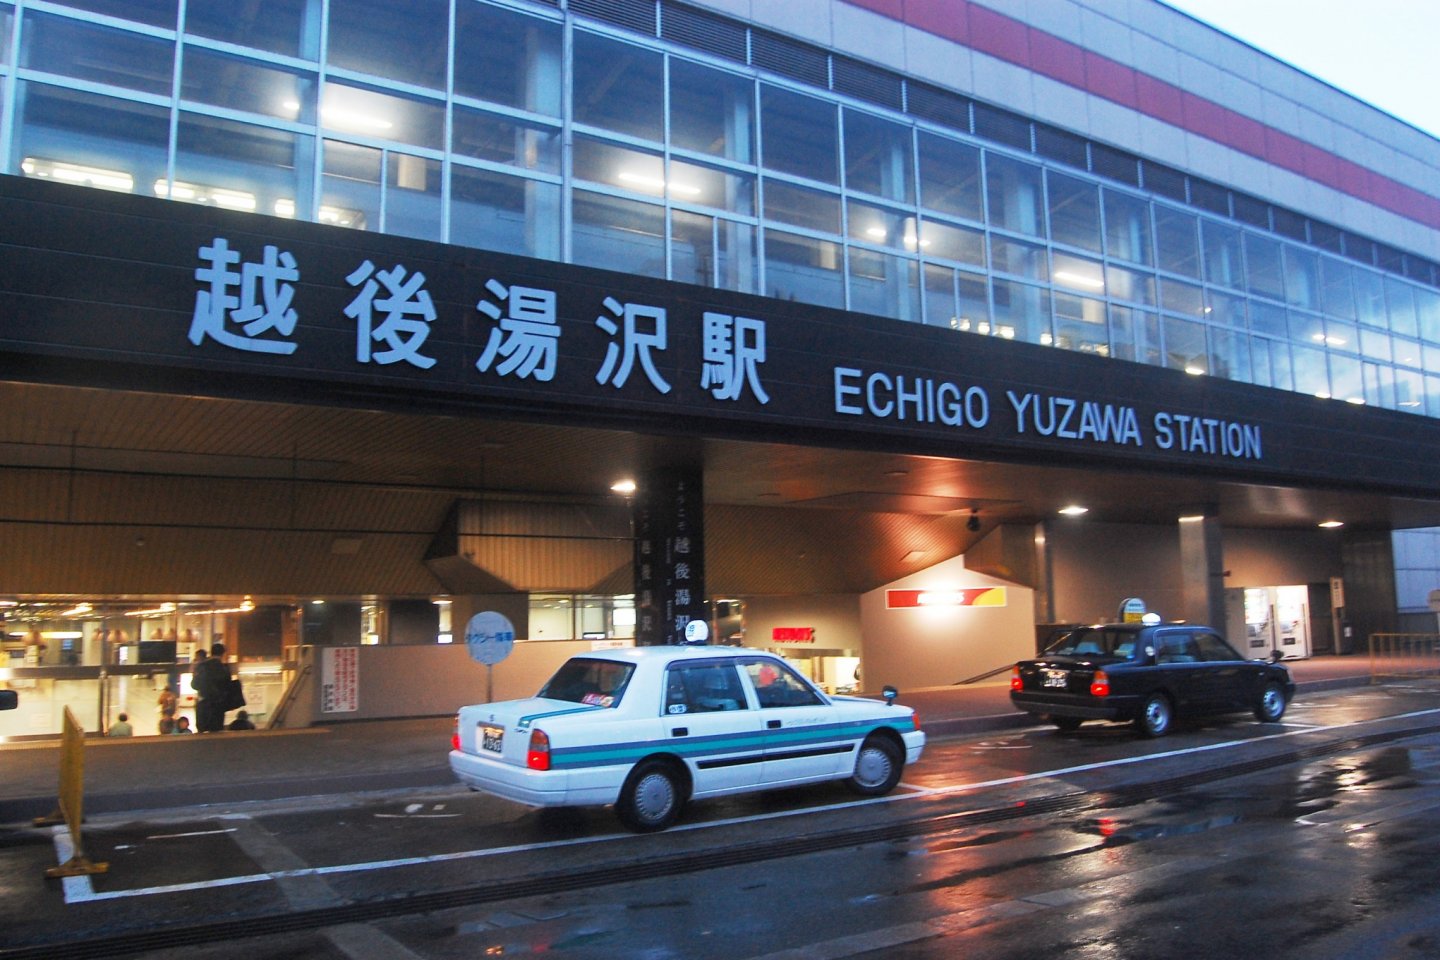 Welcome to Echigo-Yuzawa Station, a gateway to snow country